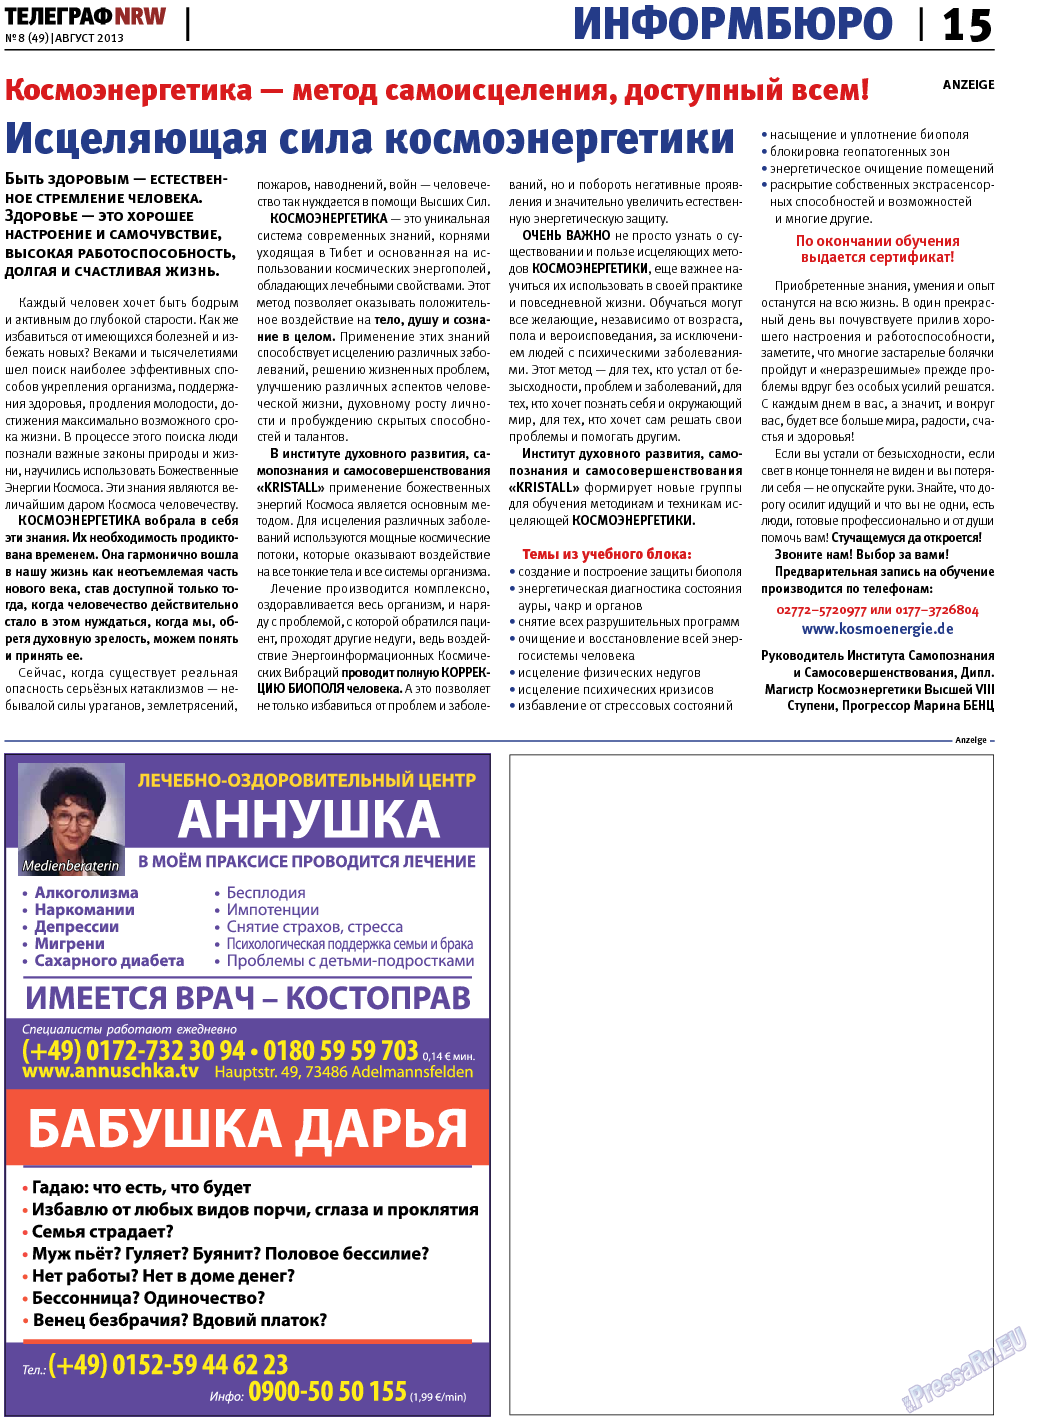 Телеграф NRW, газета. 2013 №8 стр.15